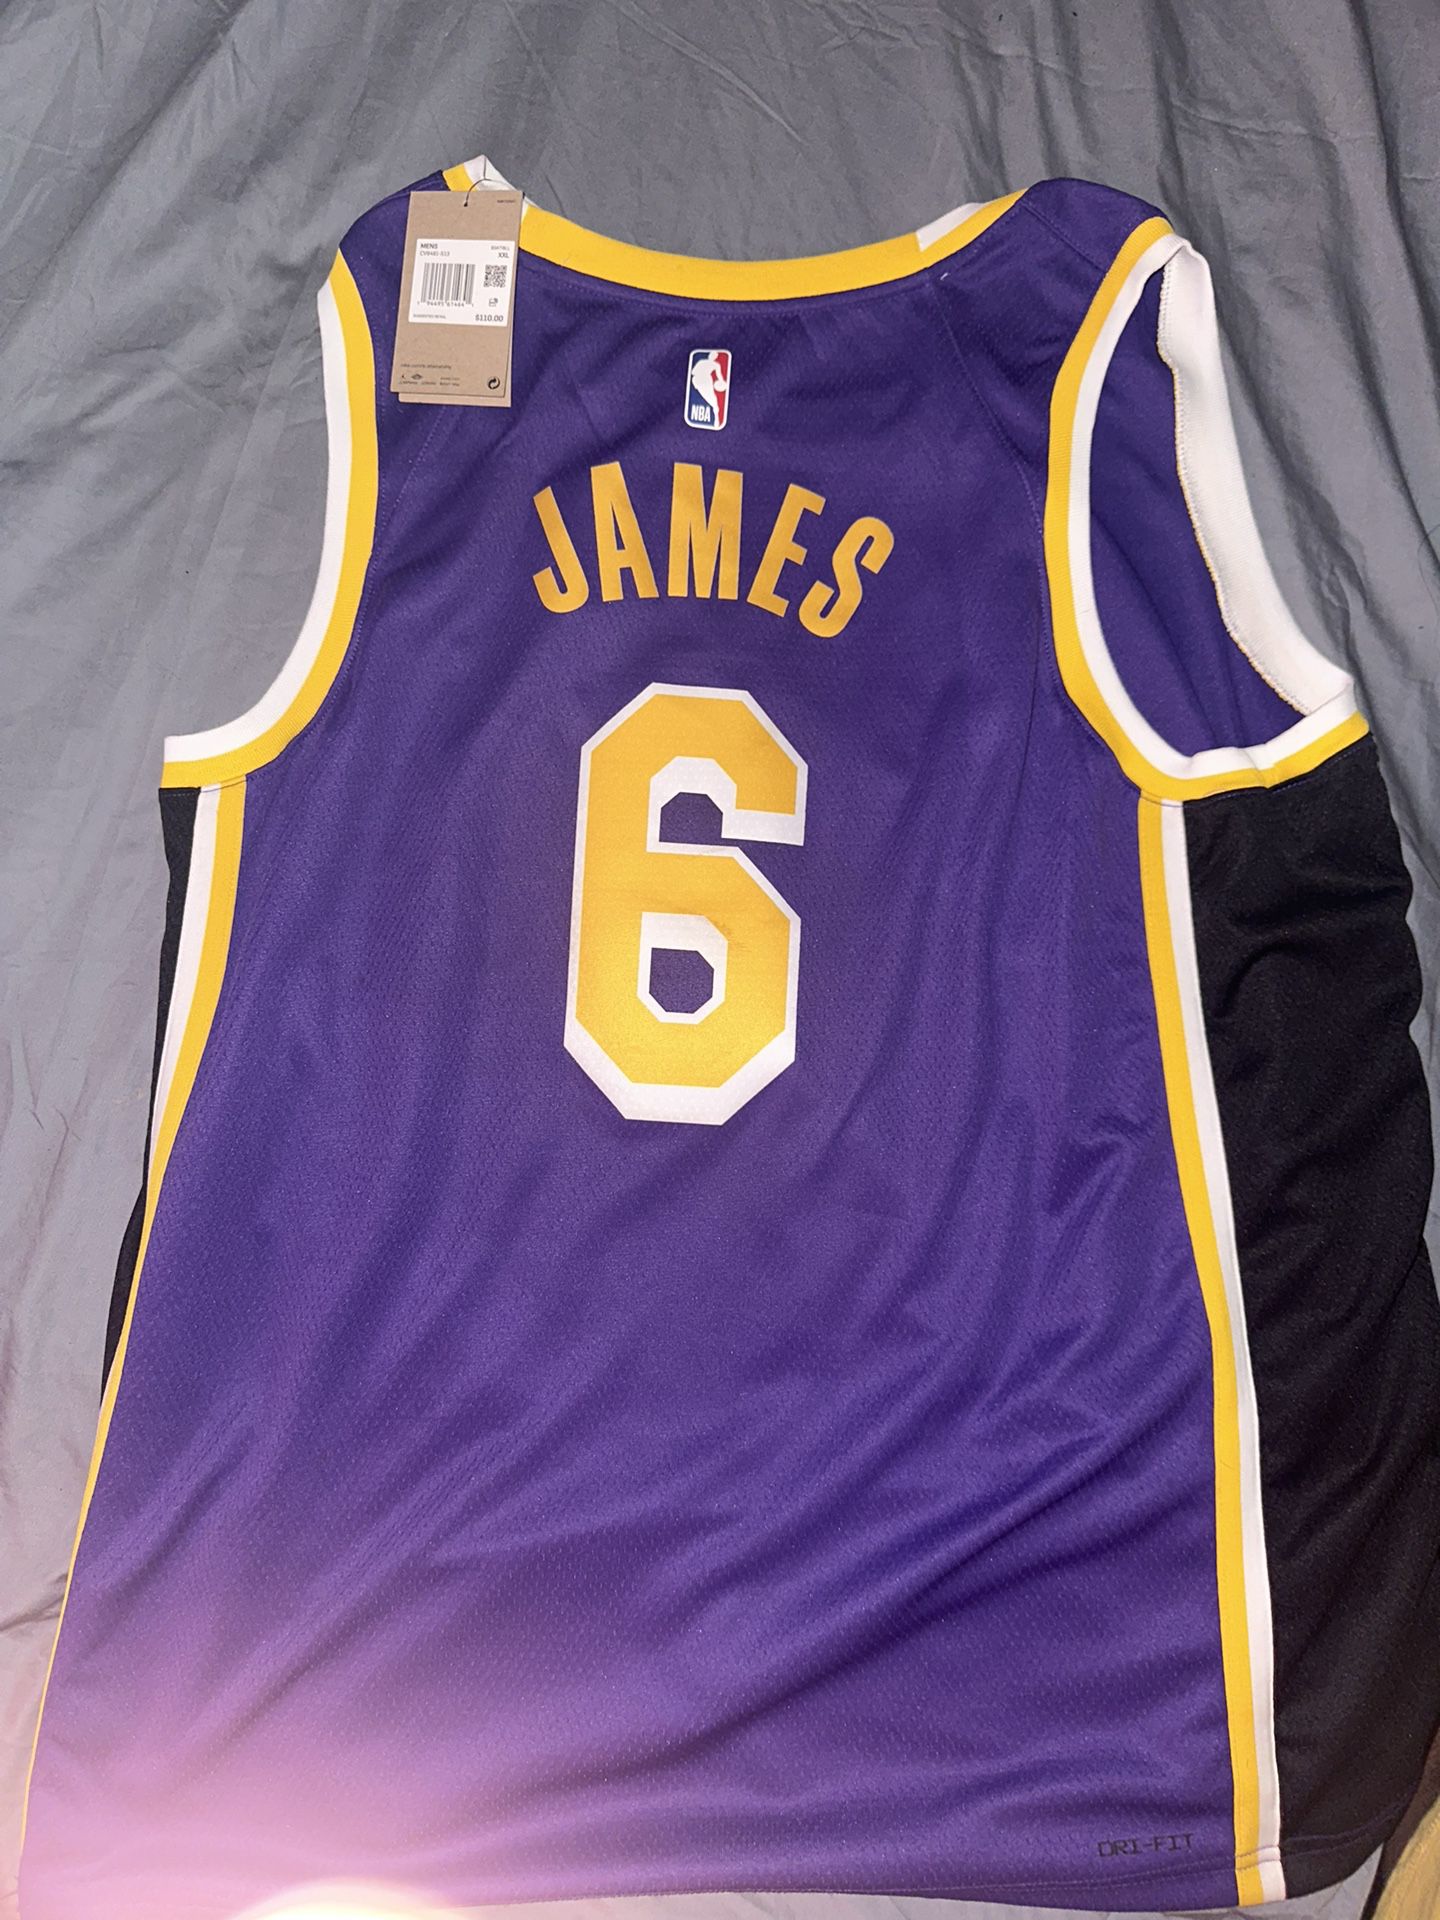 LeBron James Jersey for Sale in Wichita, KS - OfferUp